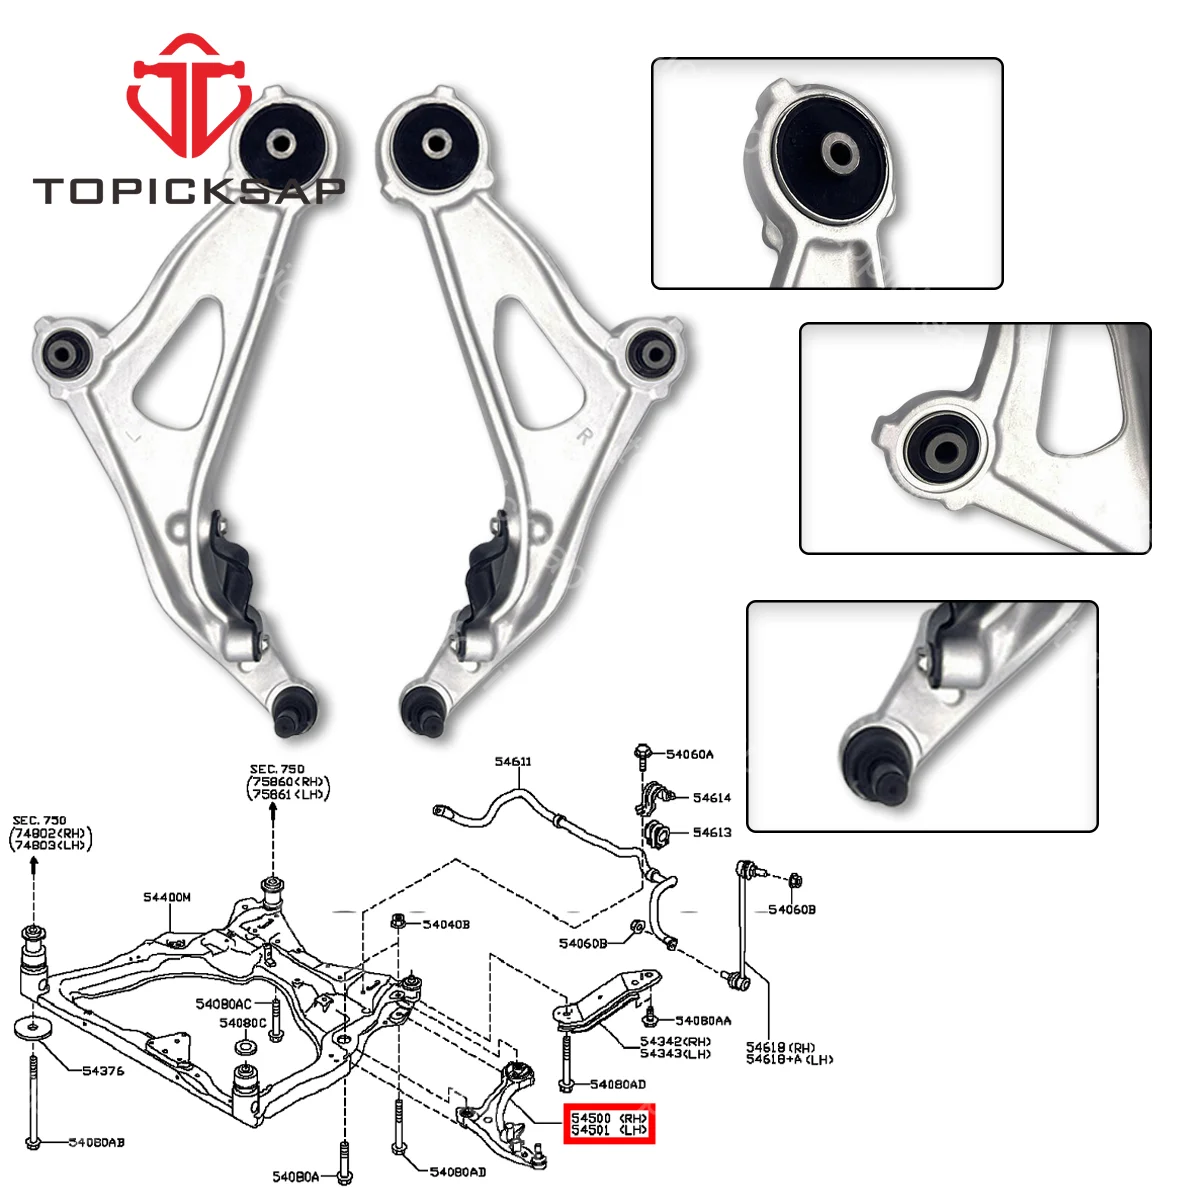 

TOPICKSAP 2pcs Pair Kits Front Lower LH & RH Control Arms Ball Joint for Nissan Pathfinder Infiniti JX35 QX60 2013 2014 - 2019